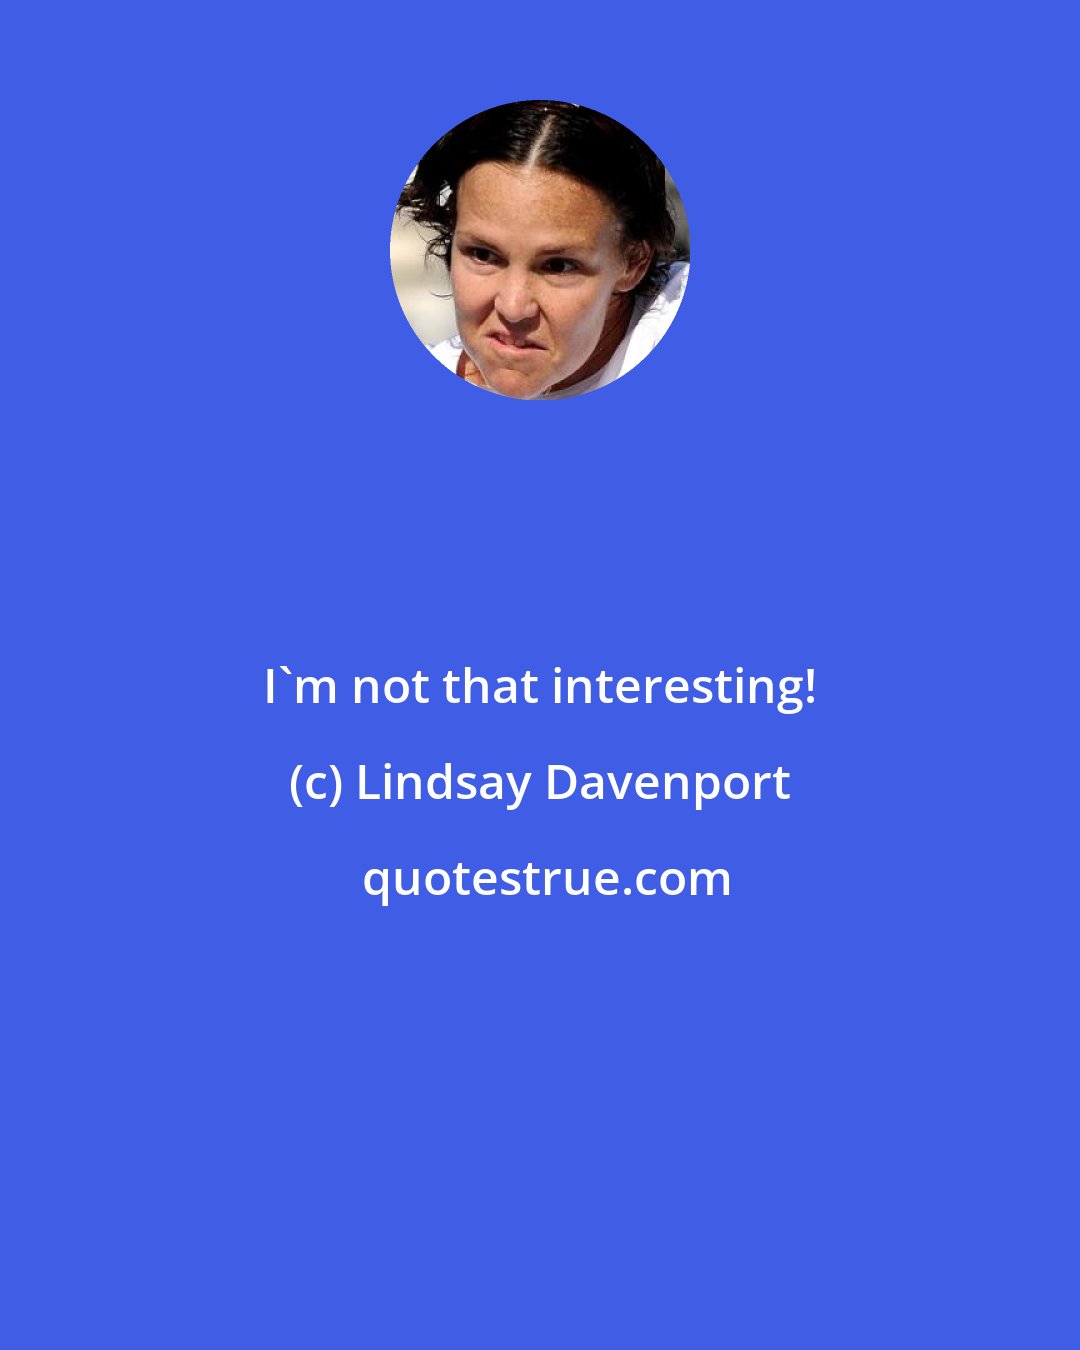 Lindsay Davenport: I'm not that interesting!